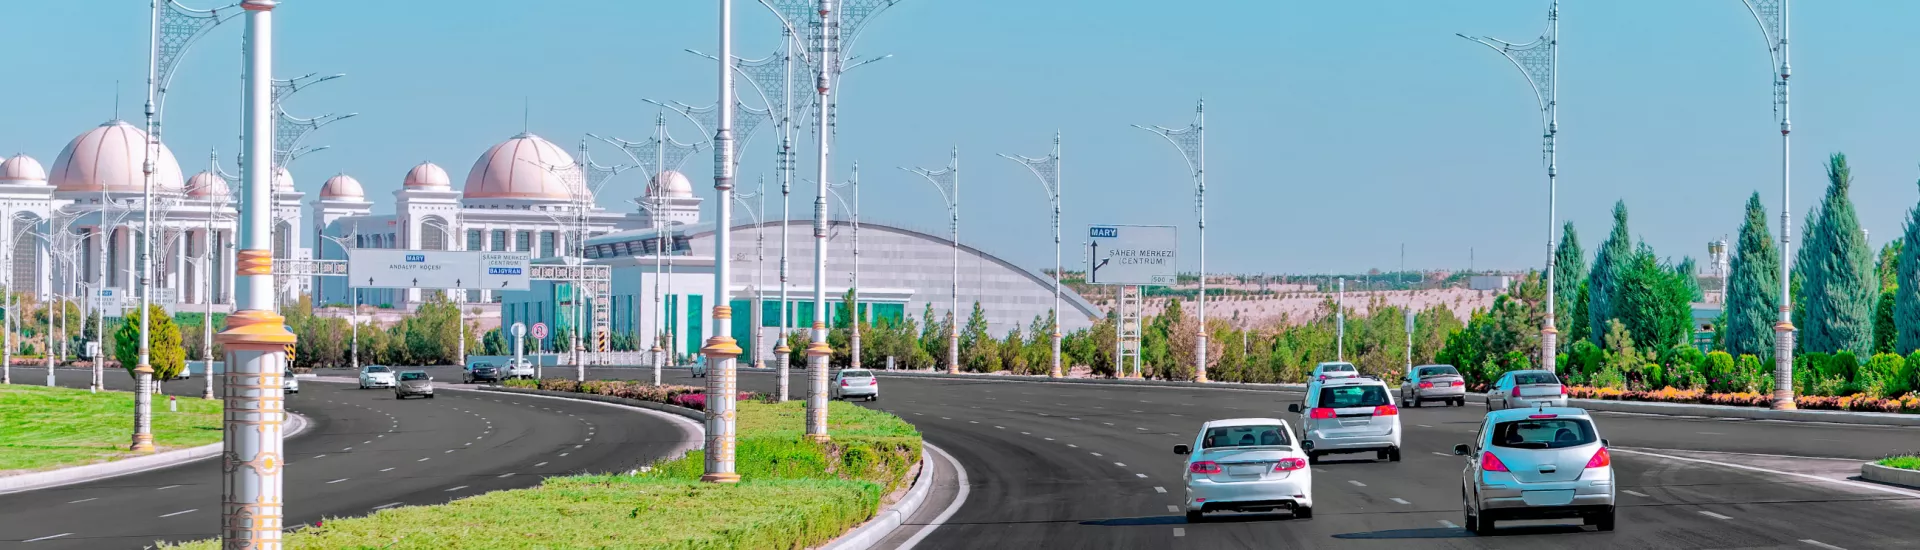 Cityscape of the center of Ashgabat. 